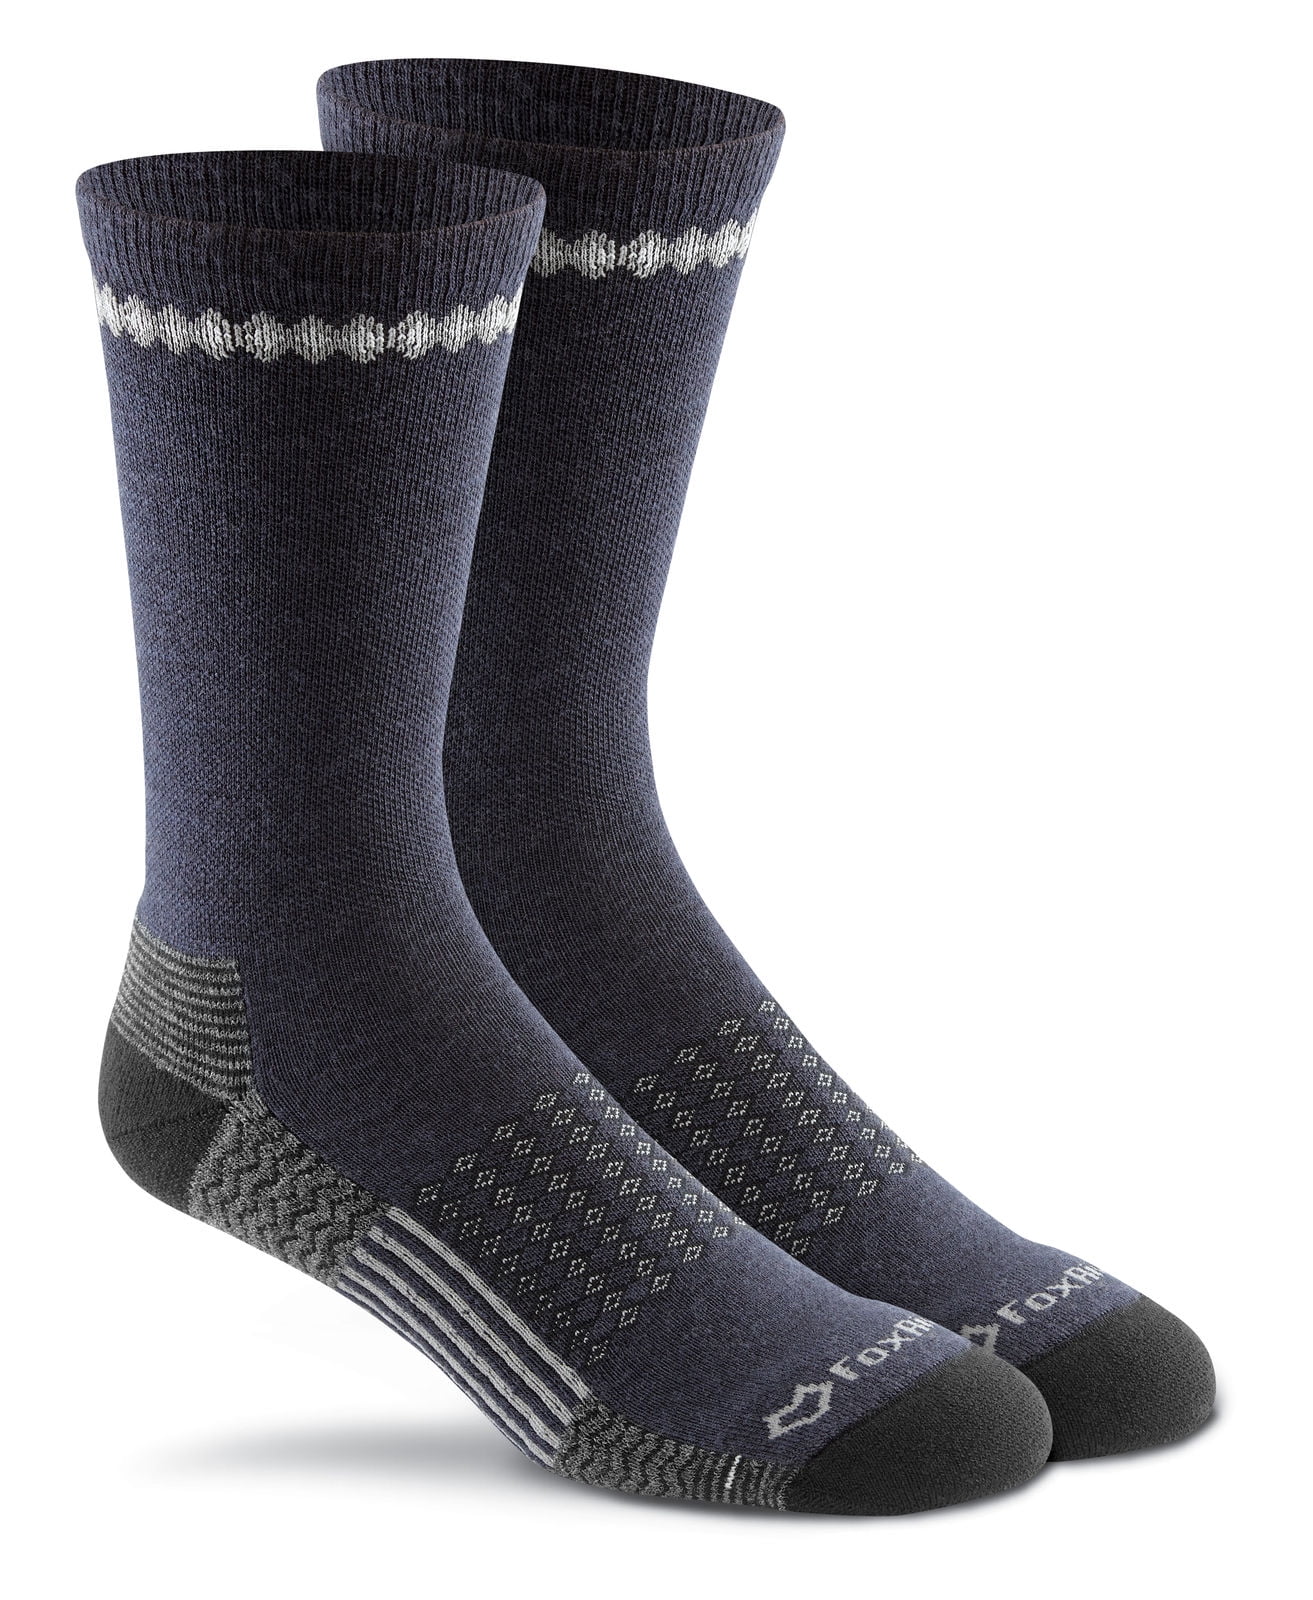 Fox River Men Reinforced Toe casual socks - Walmart.com